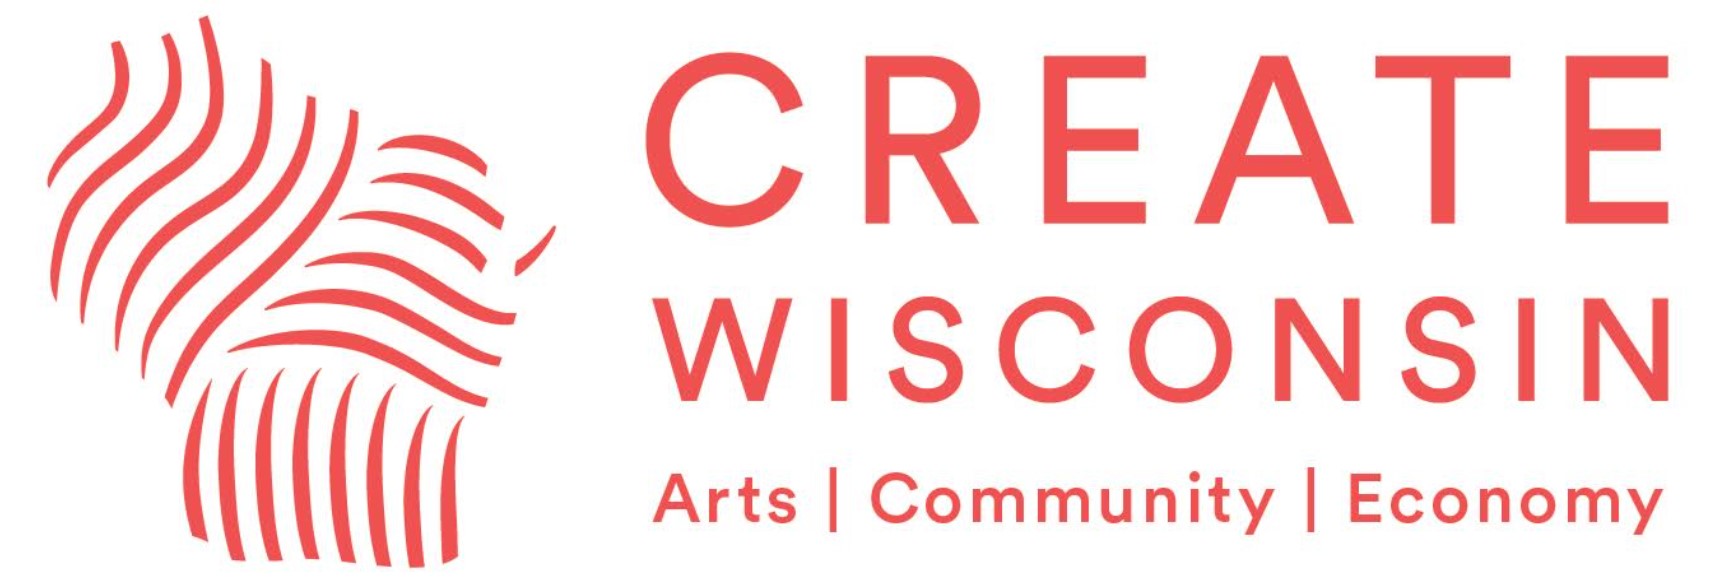 Create Wisconsin logo